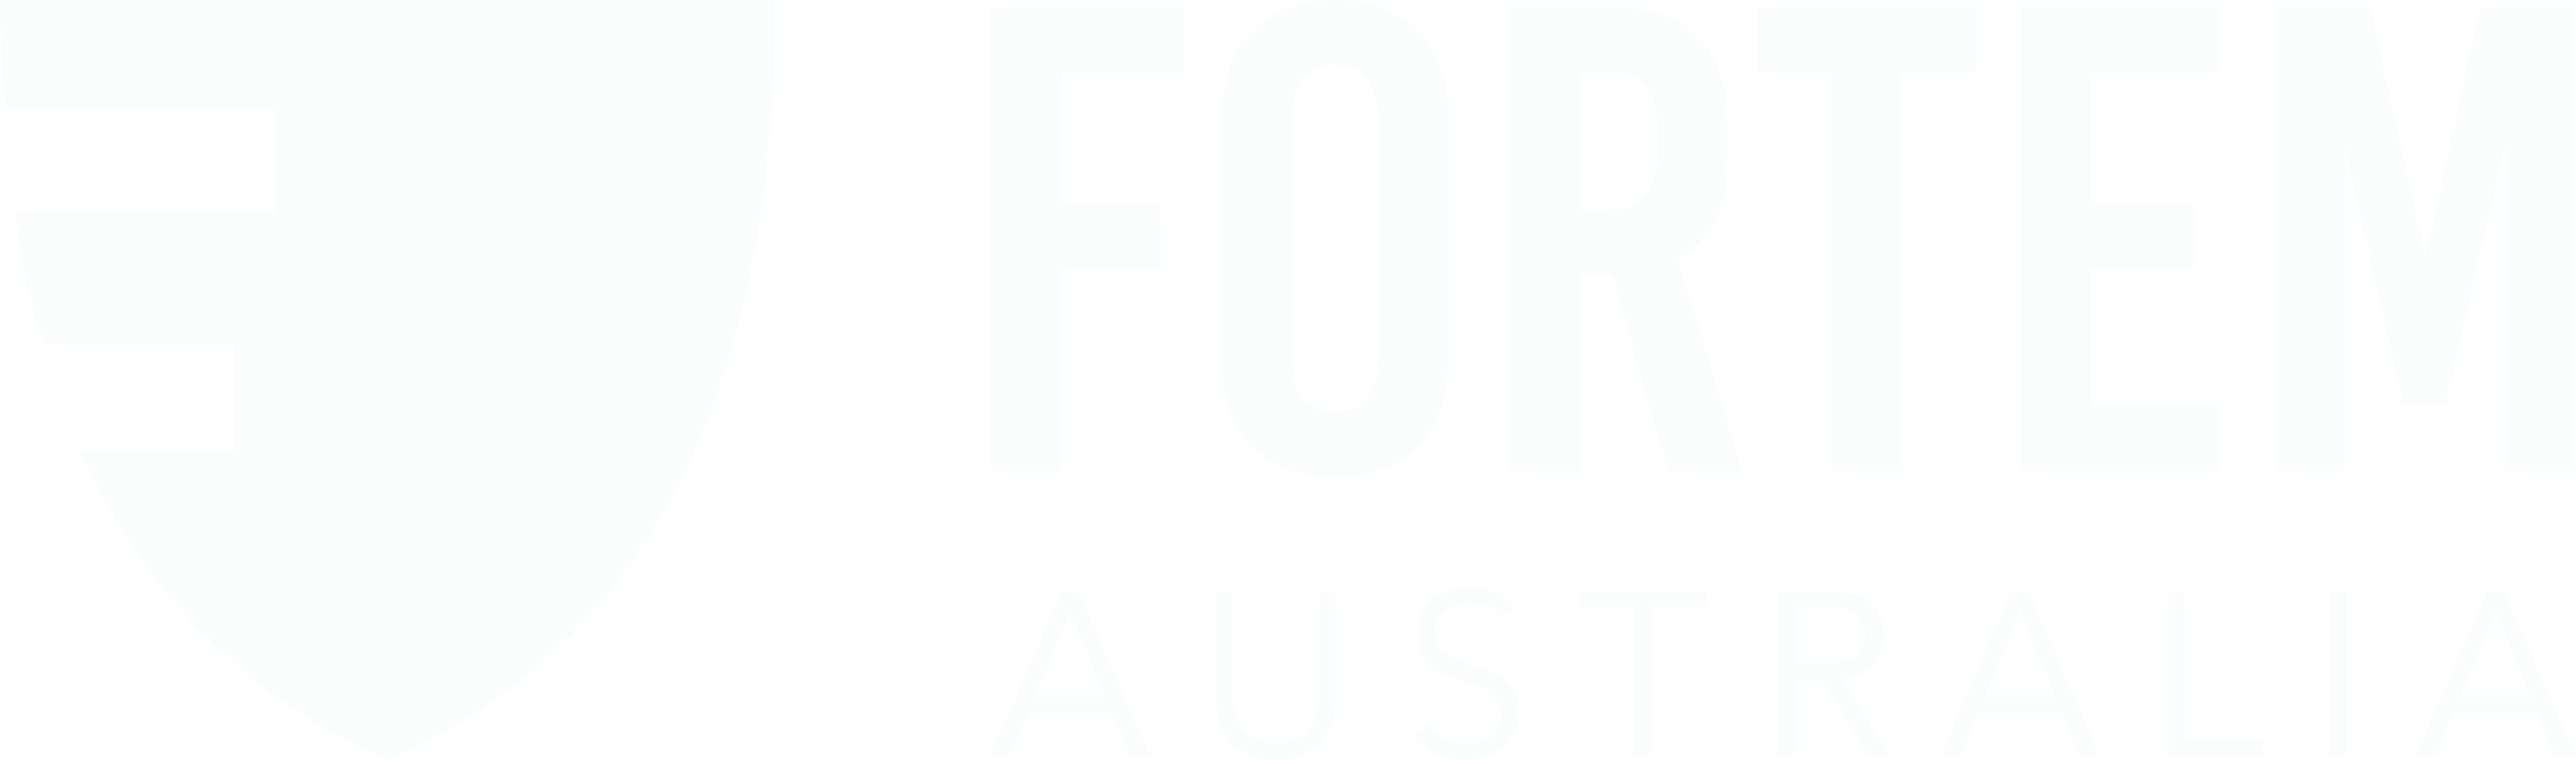 Fortem Australia logo inline white